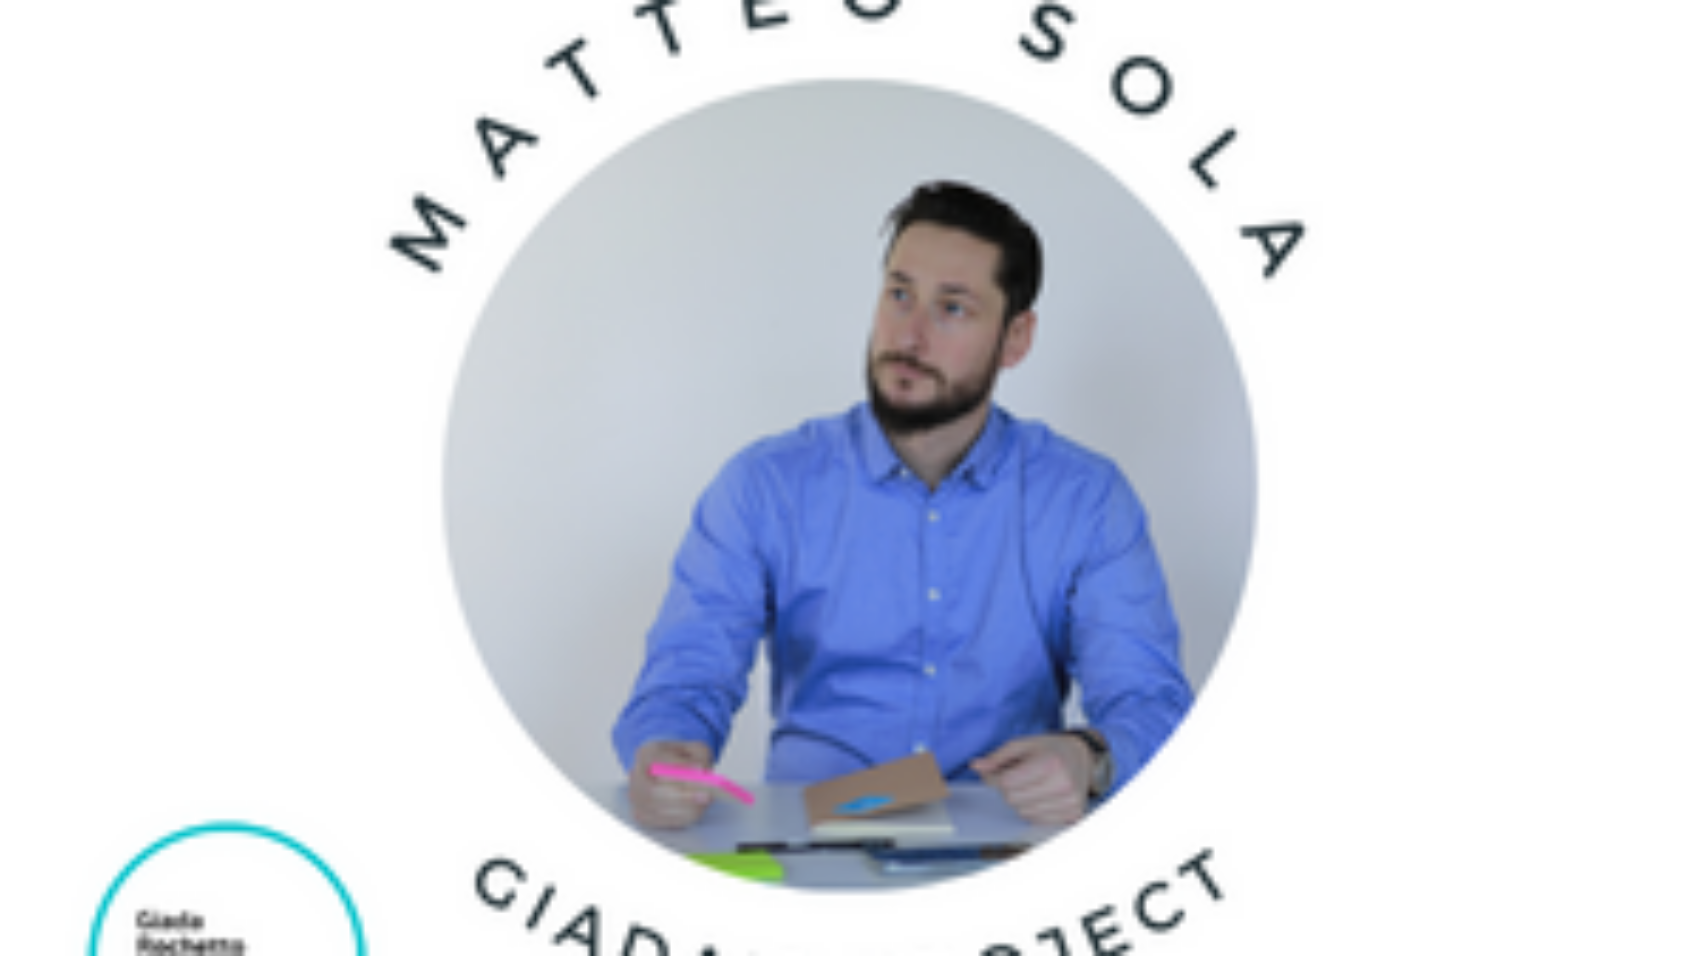 Matteo Sola HR L&D Leader iliad - Giada's project